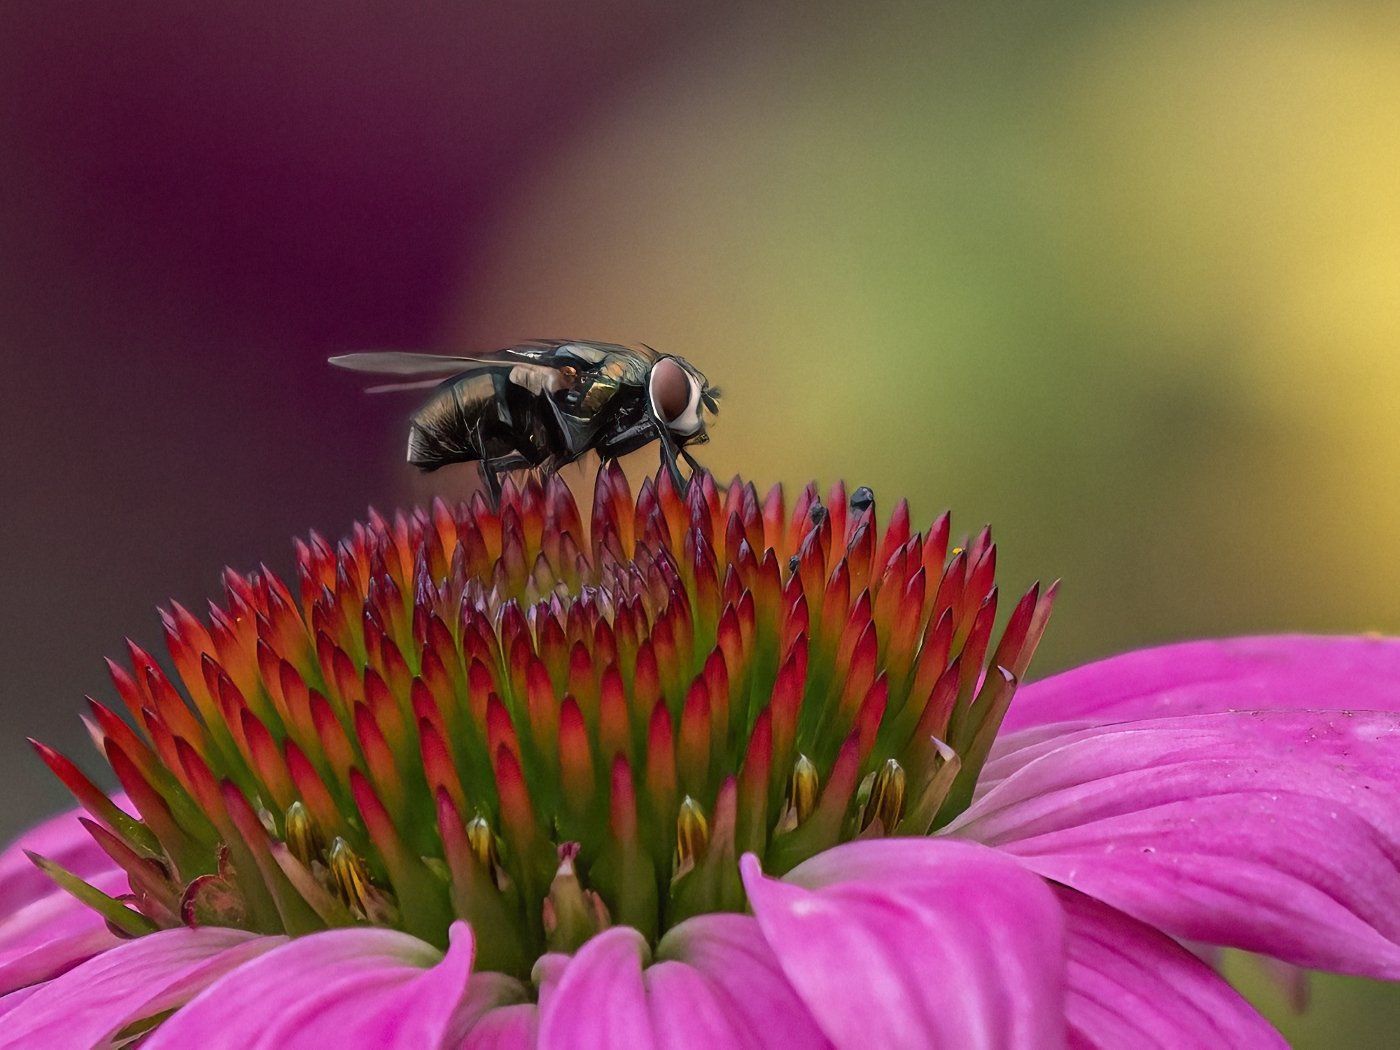 Flies are Beautiful, Mary Binford, Heard Nature Photography Club, 1 HM